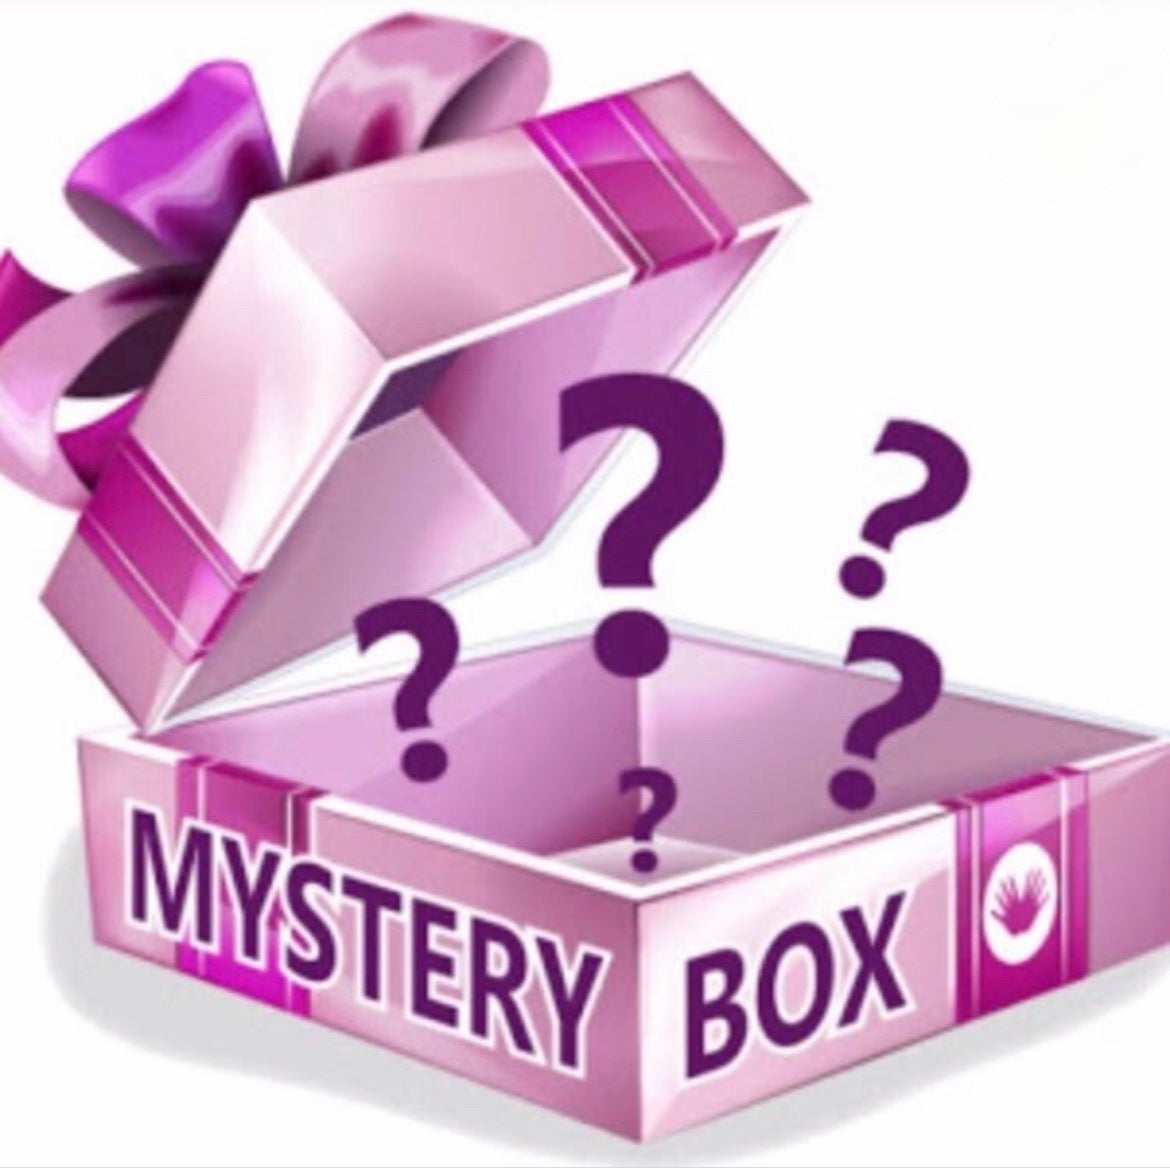 Mystery jewelry box